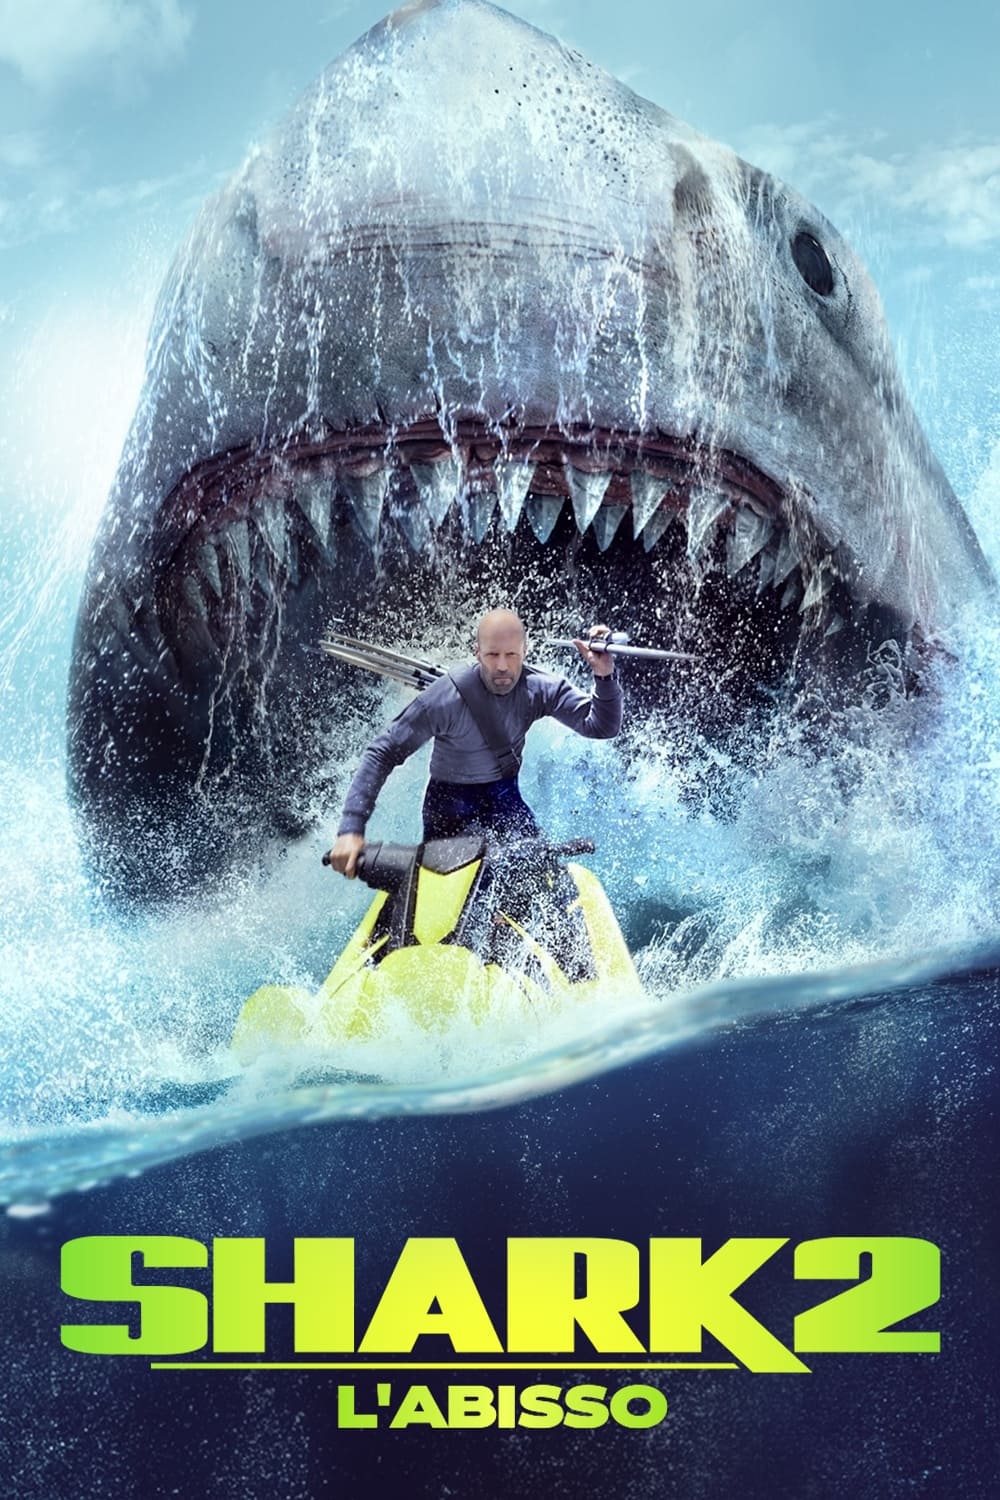 Shark 2 - L'abisso film